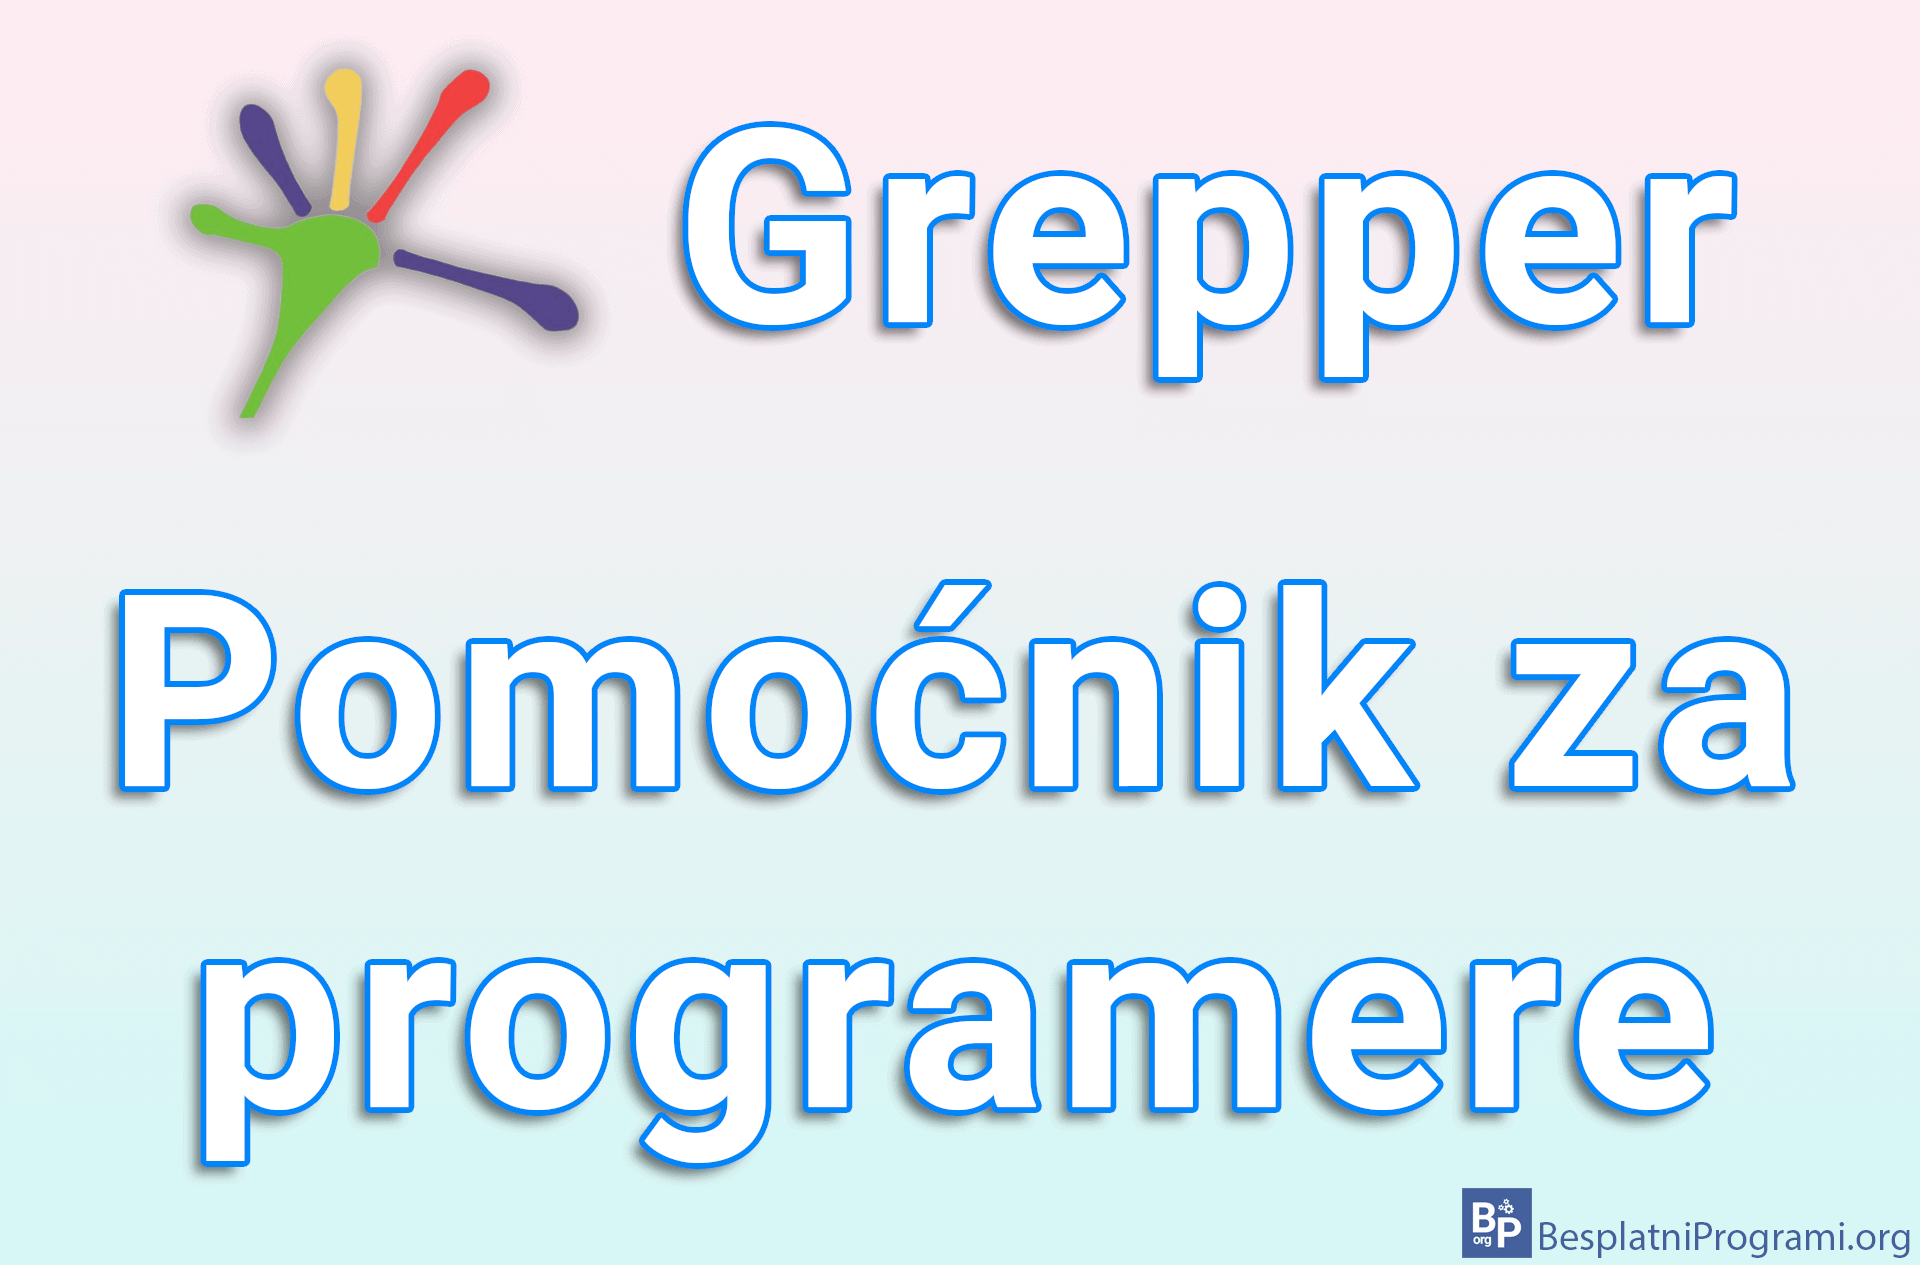 Grepper - Pomoćnik za programere